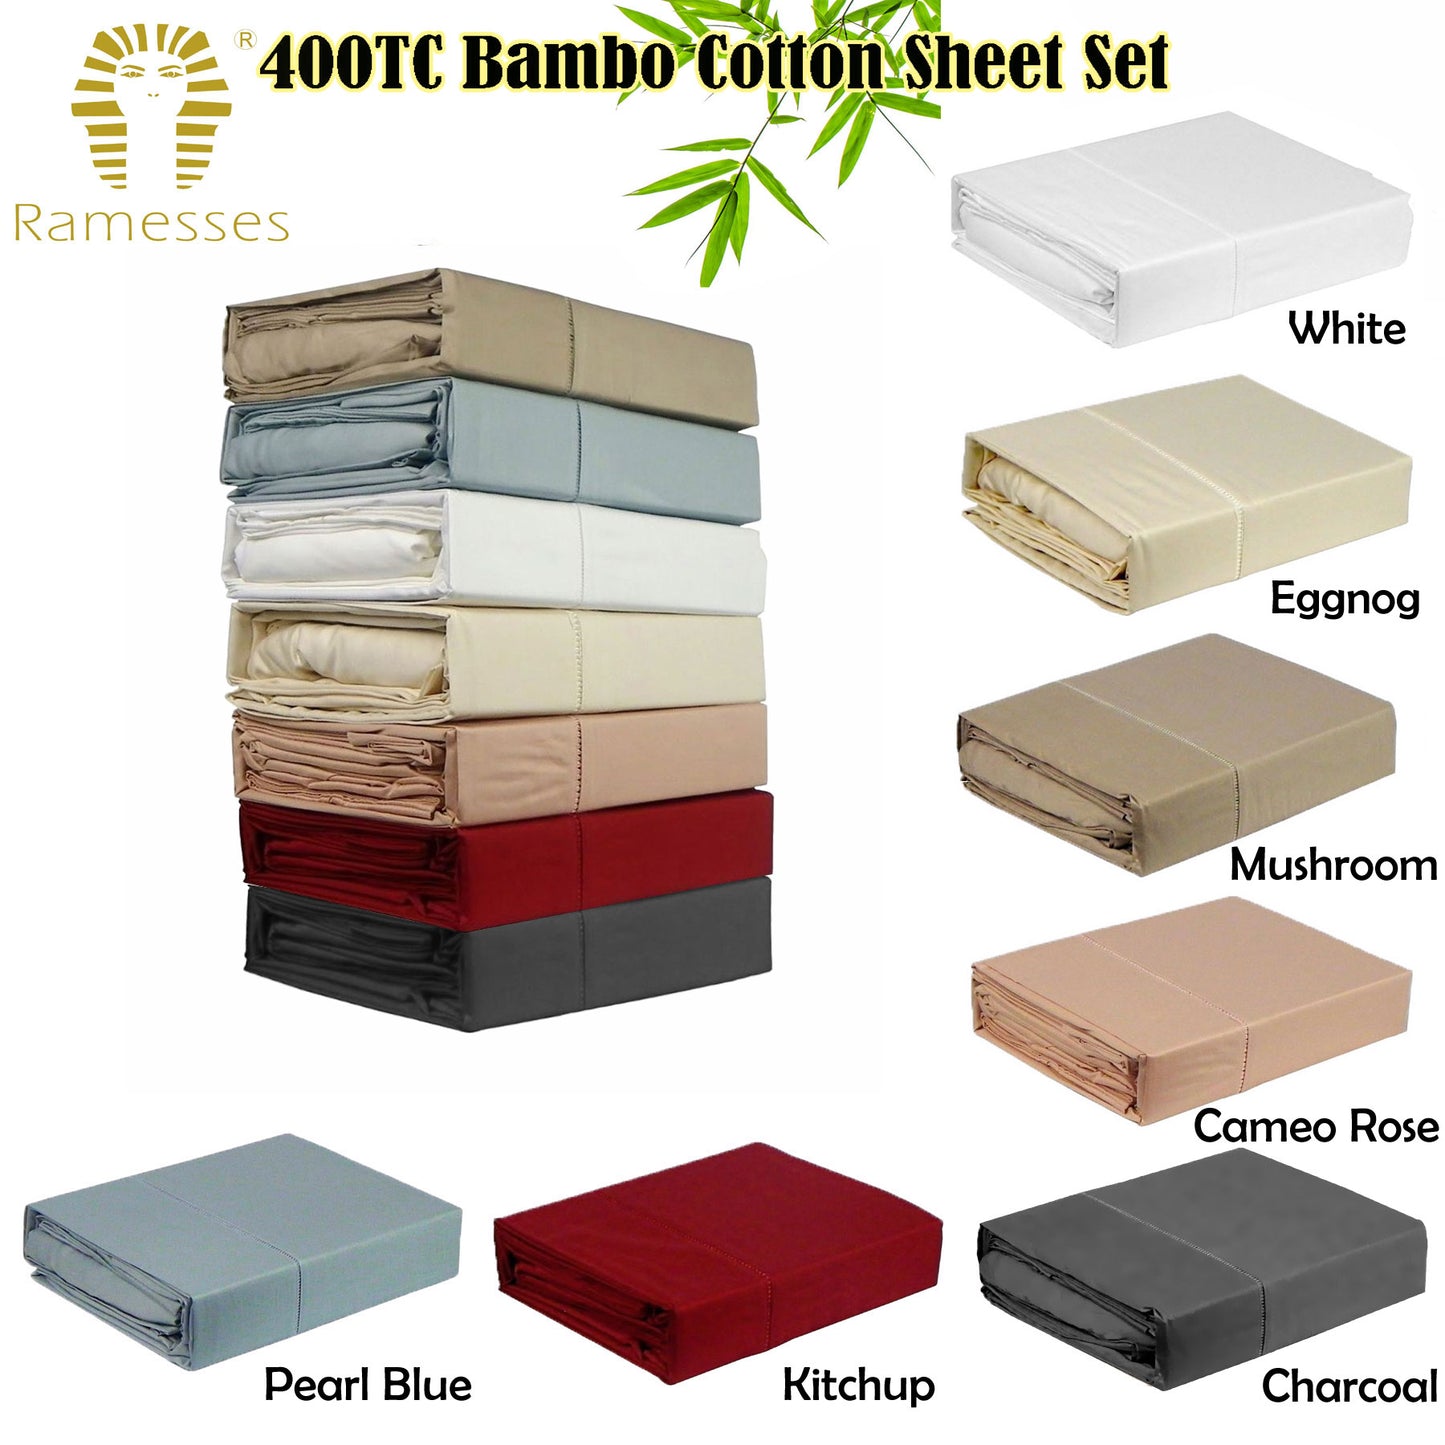 Ramesses 400TC Bamboo/Cotton Sheet Set Ketchup KING